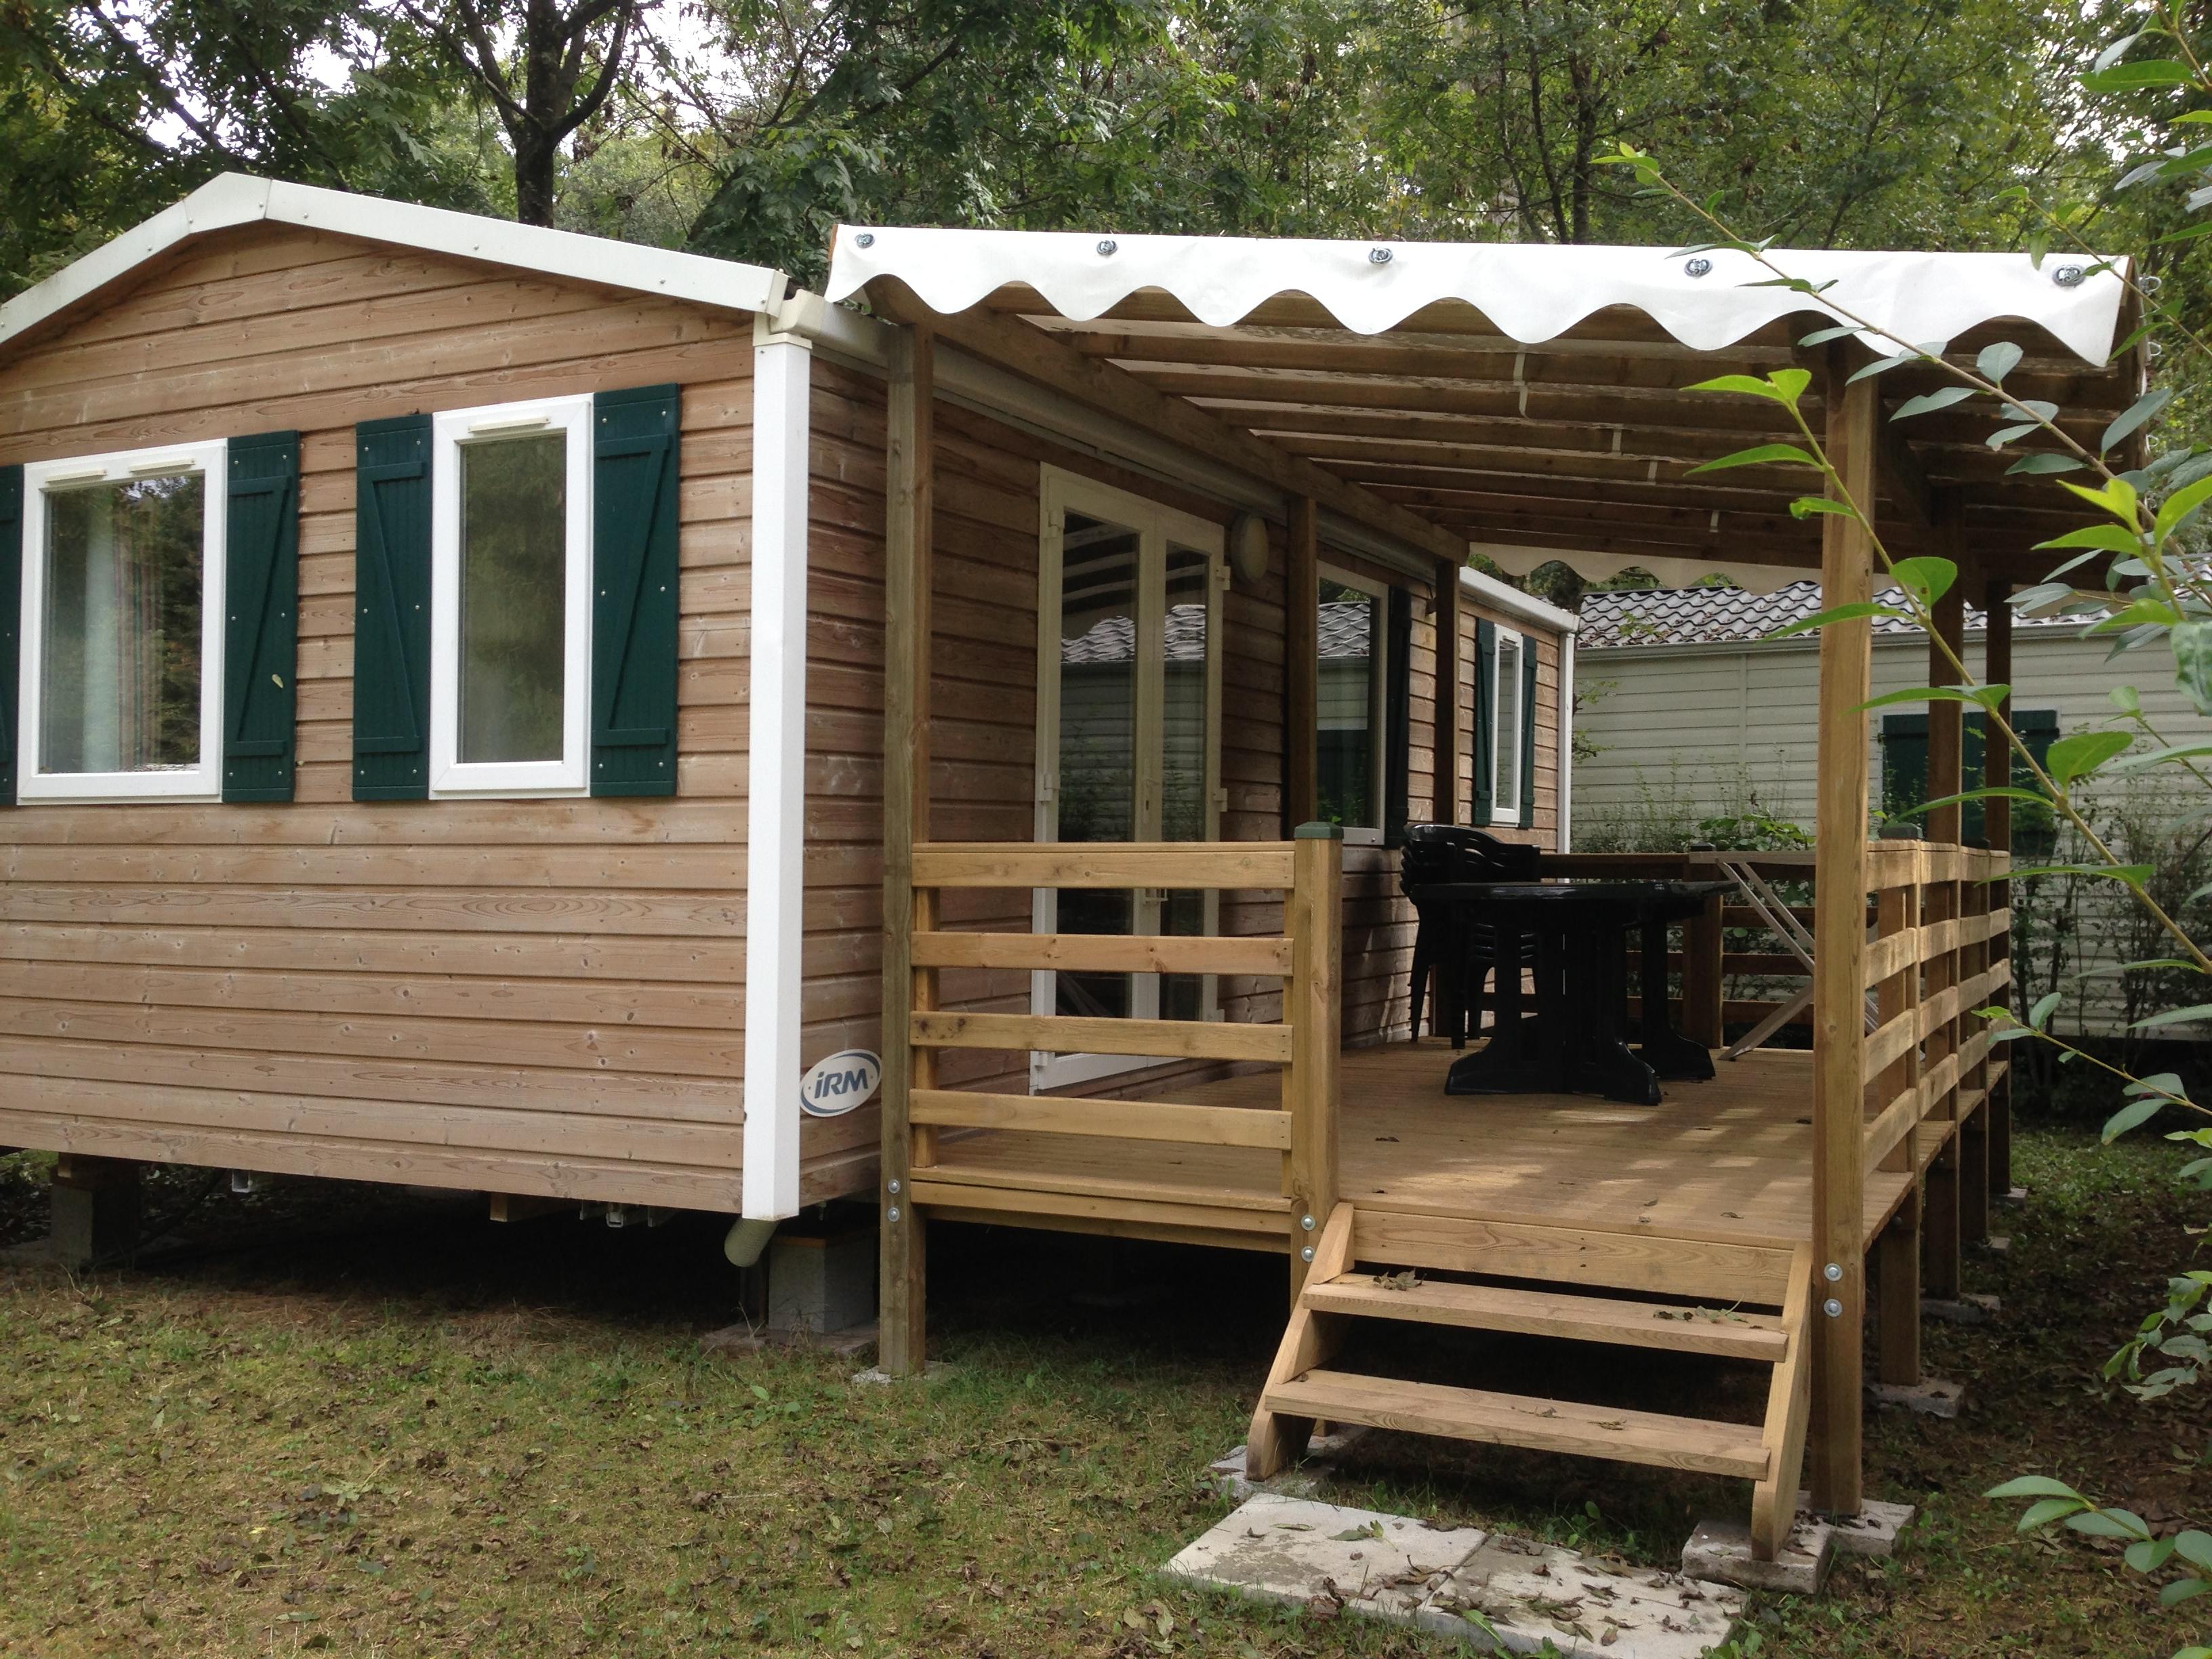 Mietunterkunft - Mobil-Home Titania  (30 M2) - 2 Chambres - Année 2013 - Camping de Saumont